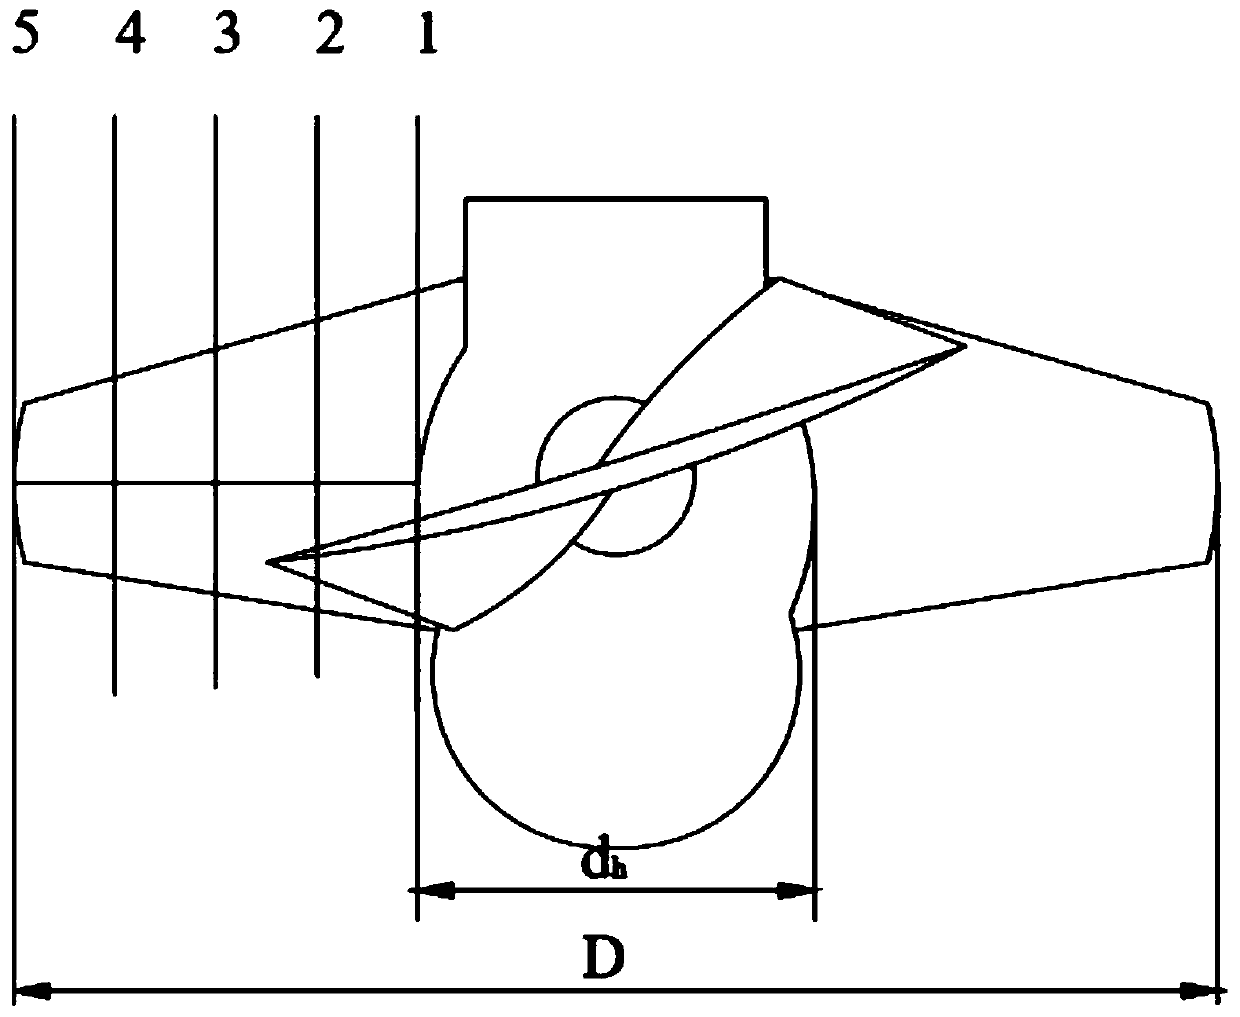 Designing method of axial flow pump impeller based on wheelbase